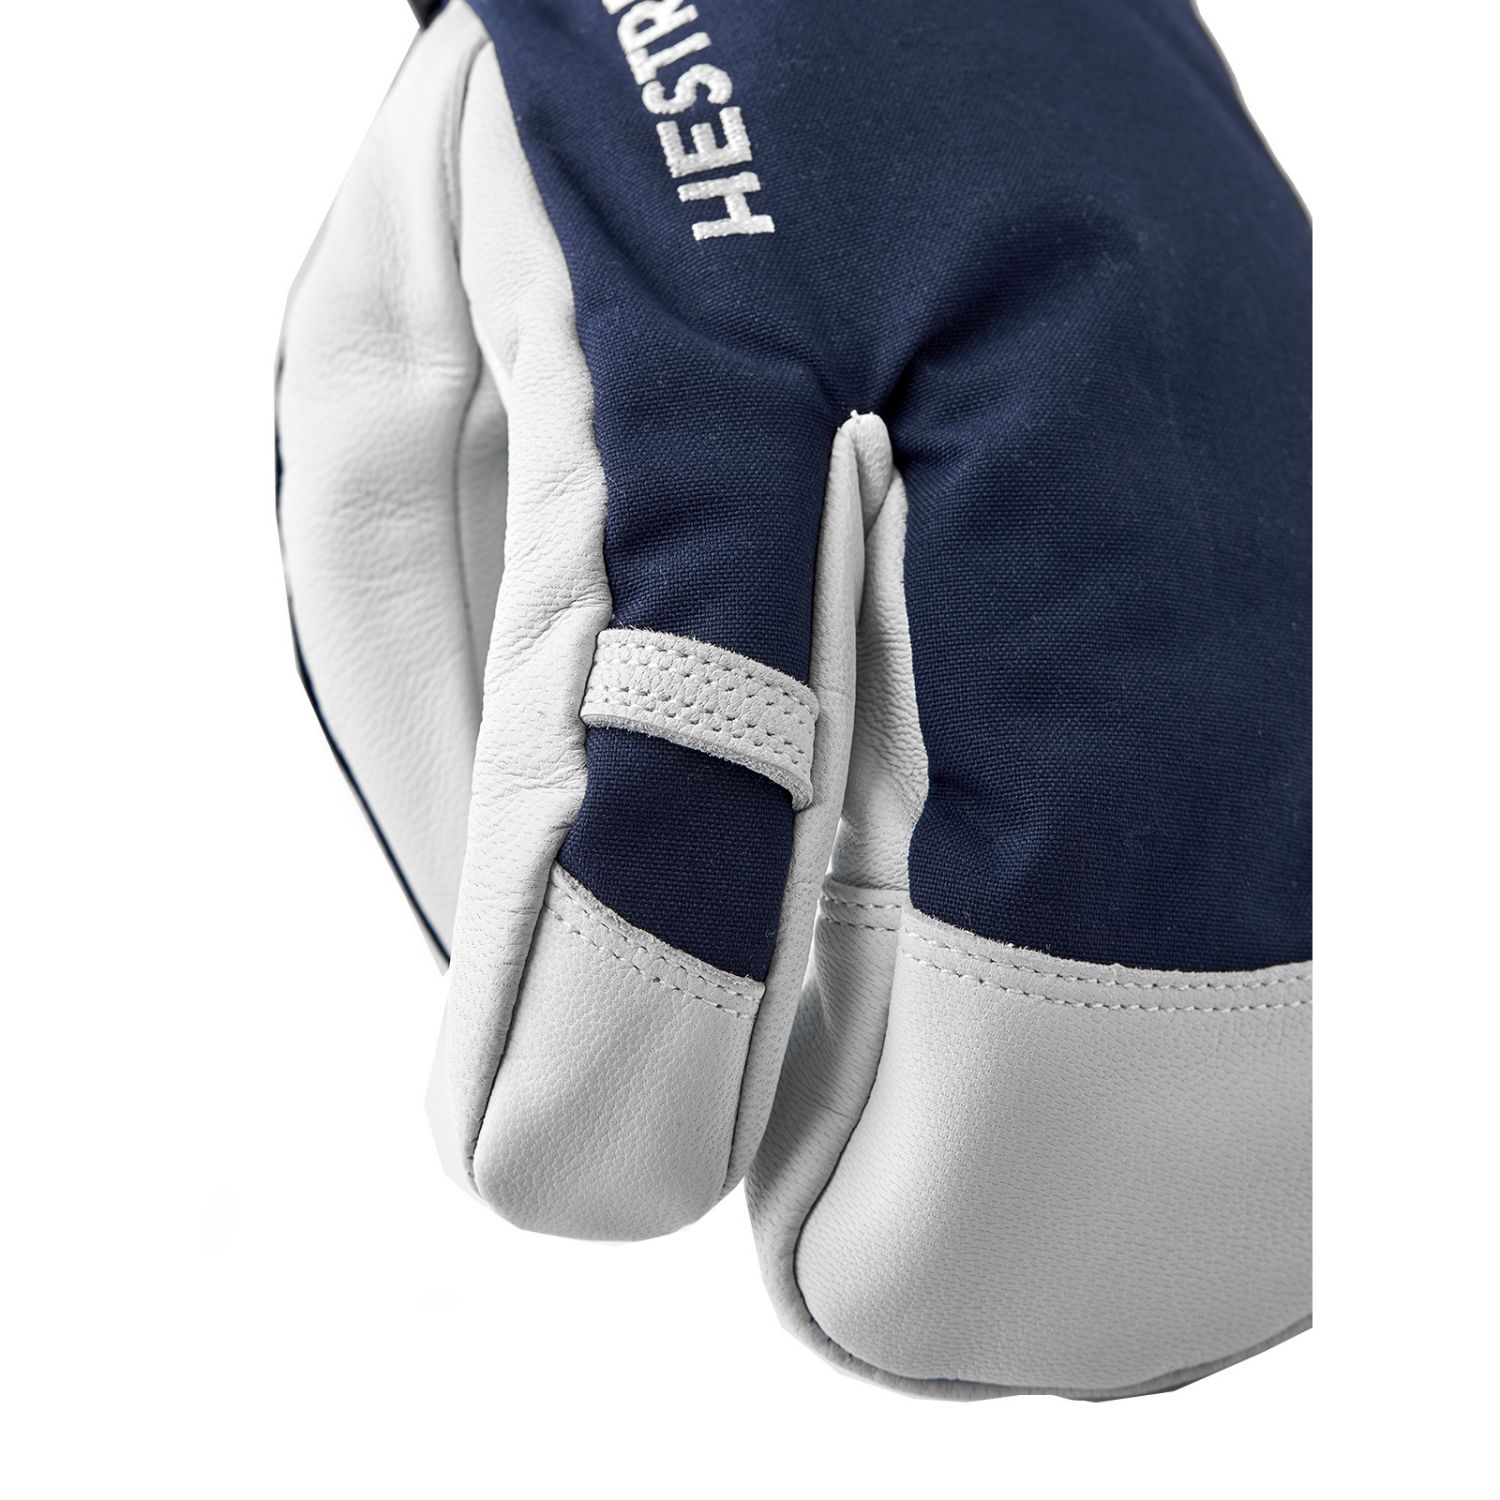 Hestra Army Leather Heli 3 doigts gants de ski, bleu foncé